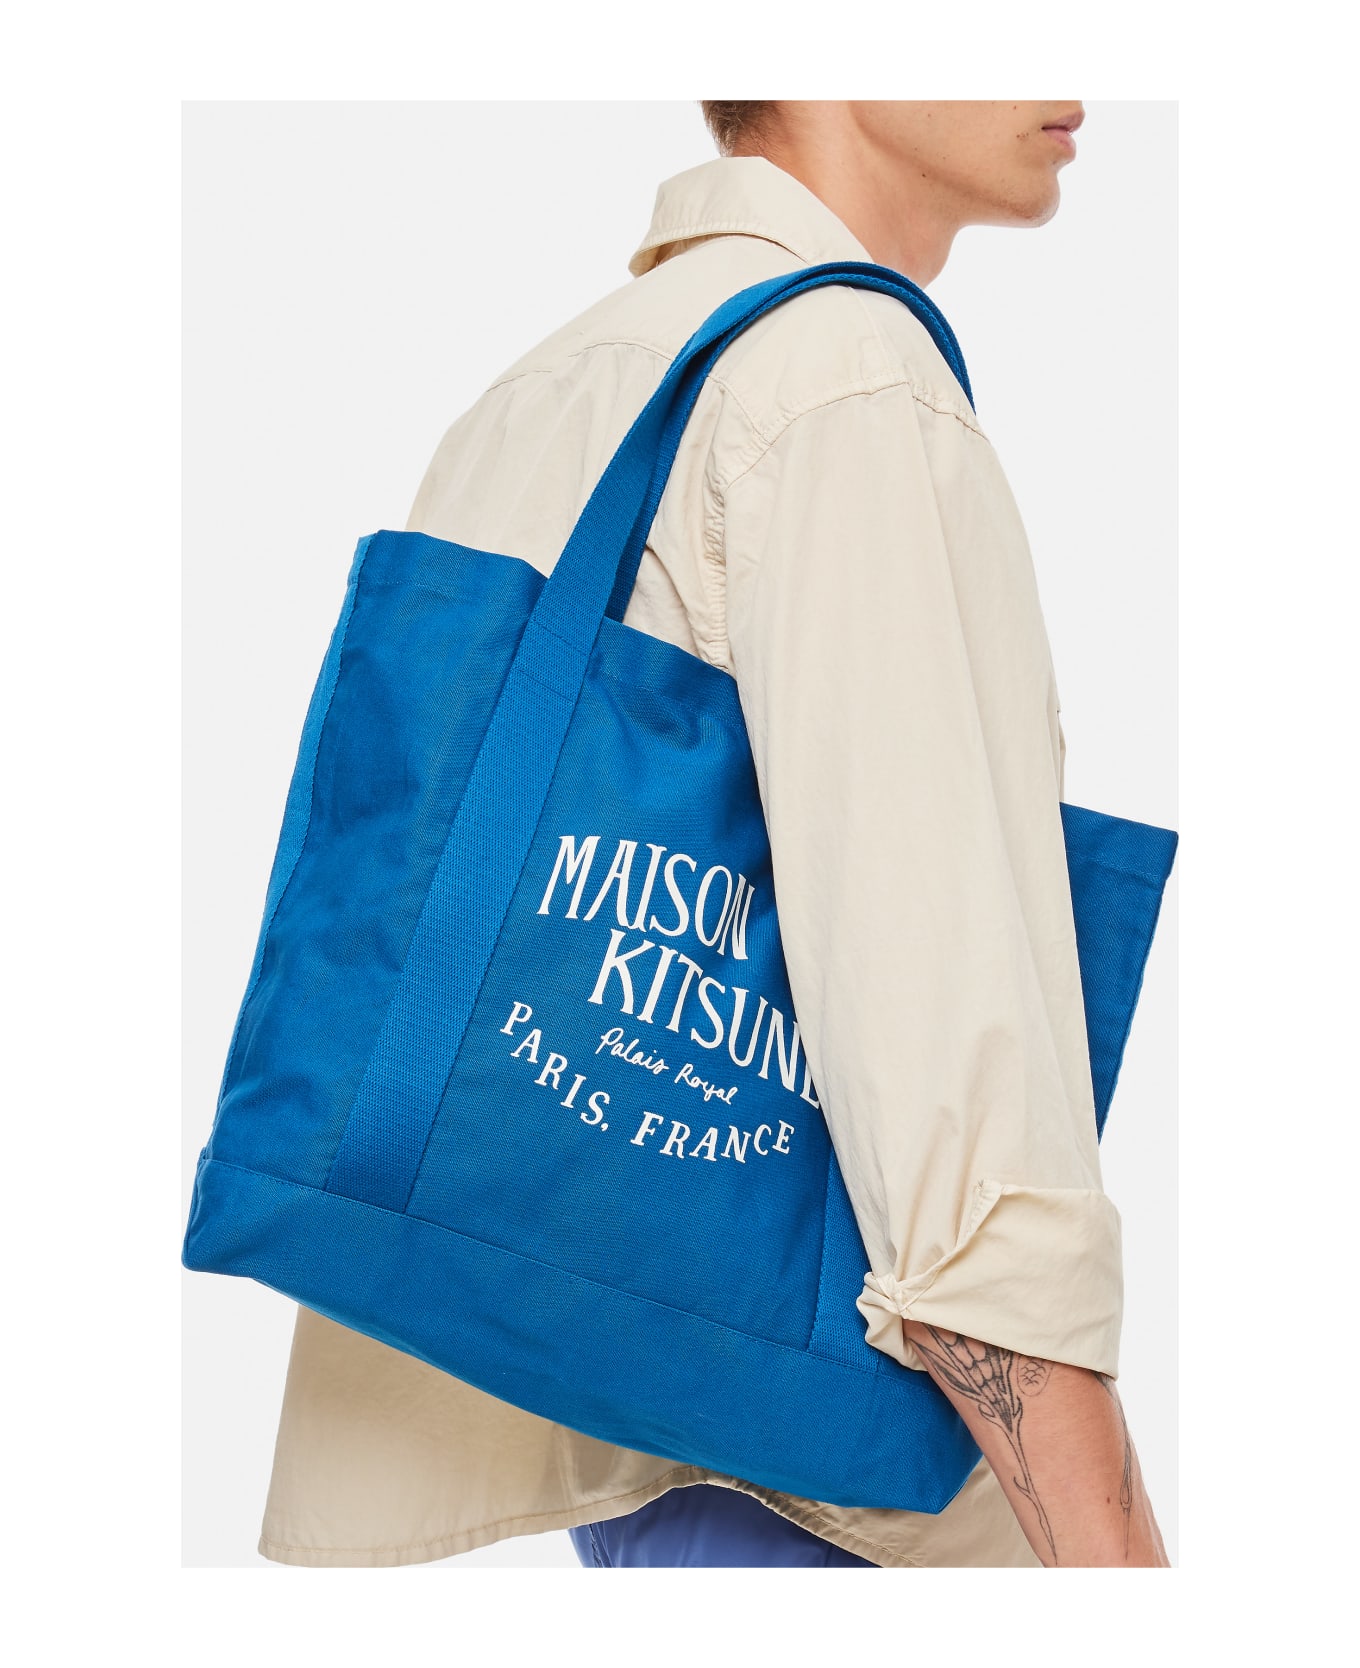 Maison Kitsuné Updated Palais Royal Shopping Bag